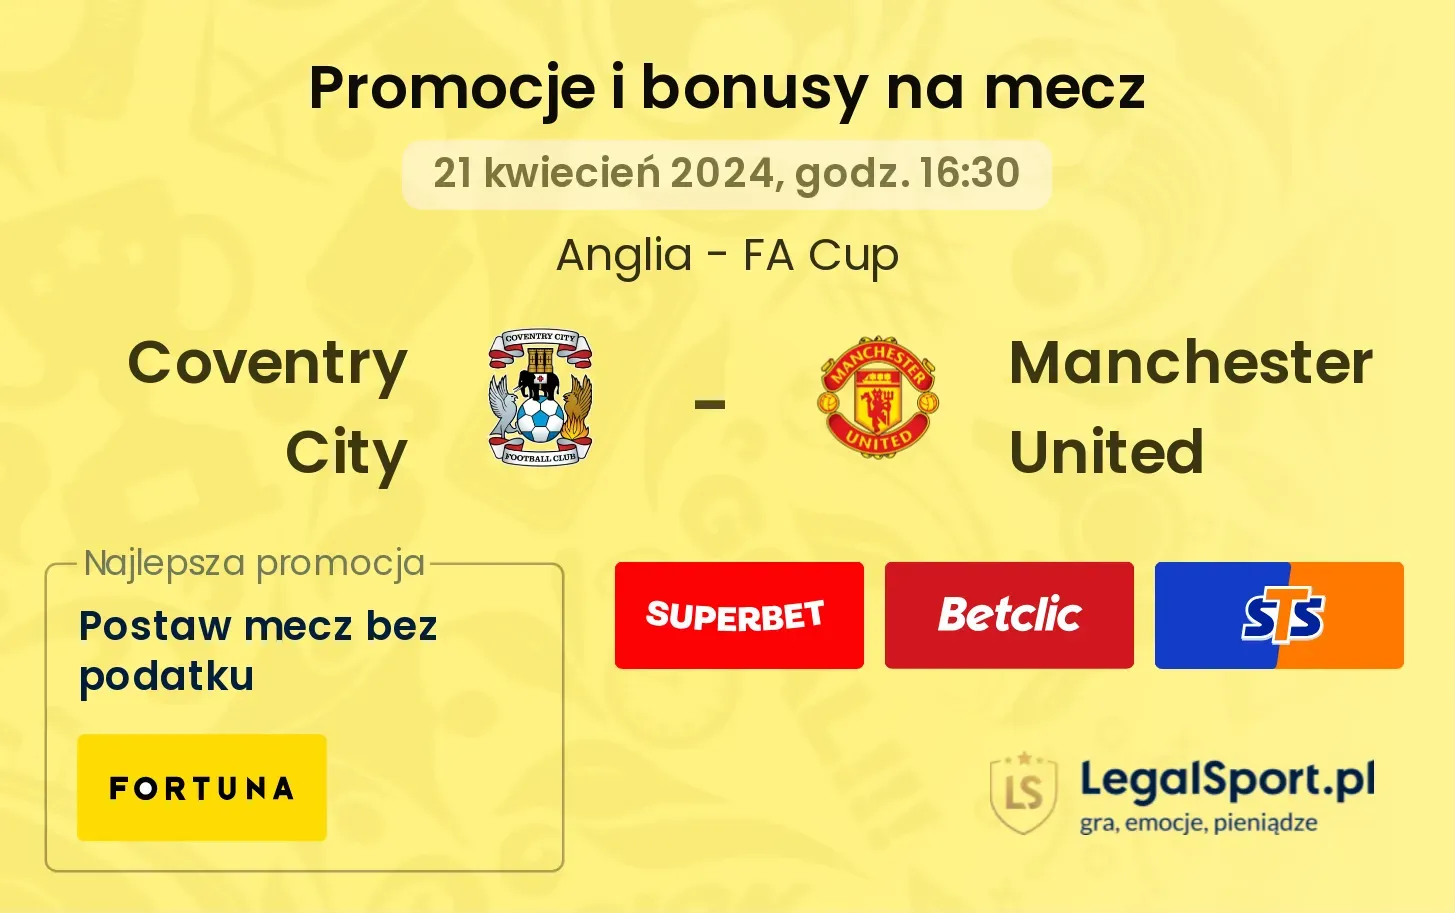 Coventry City - Manchester United bonusy i promocje (21.04, 16:30)